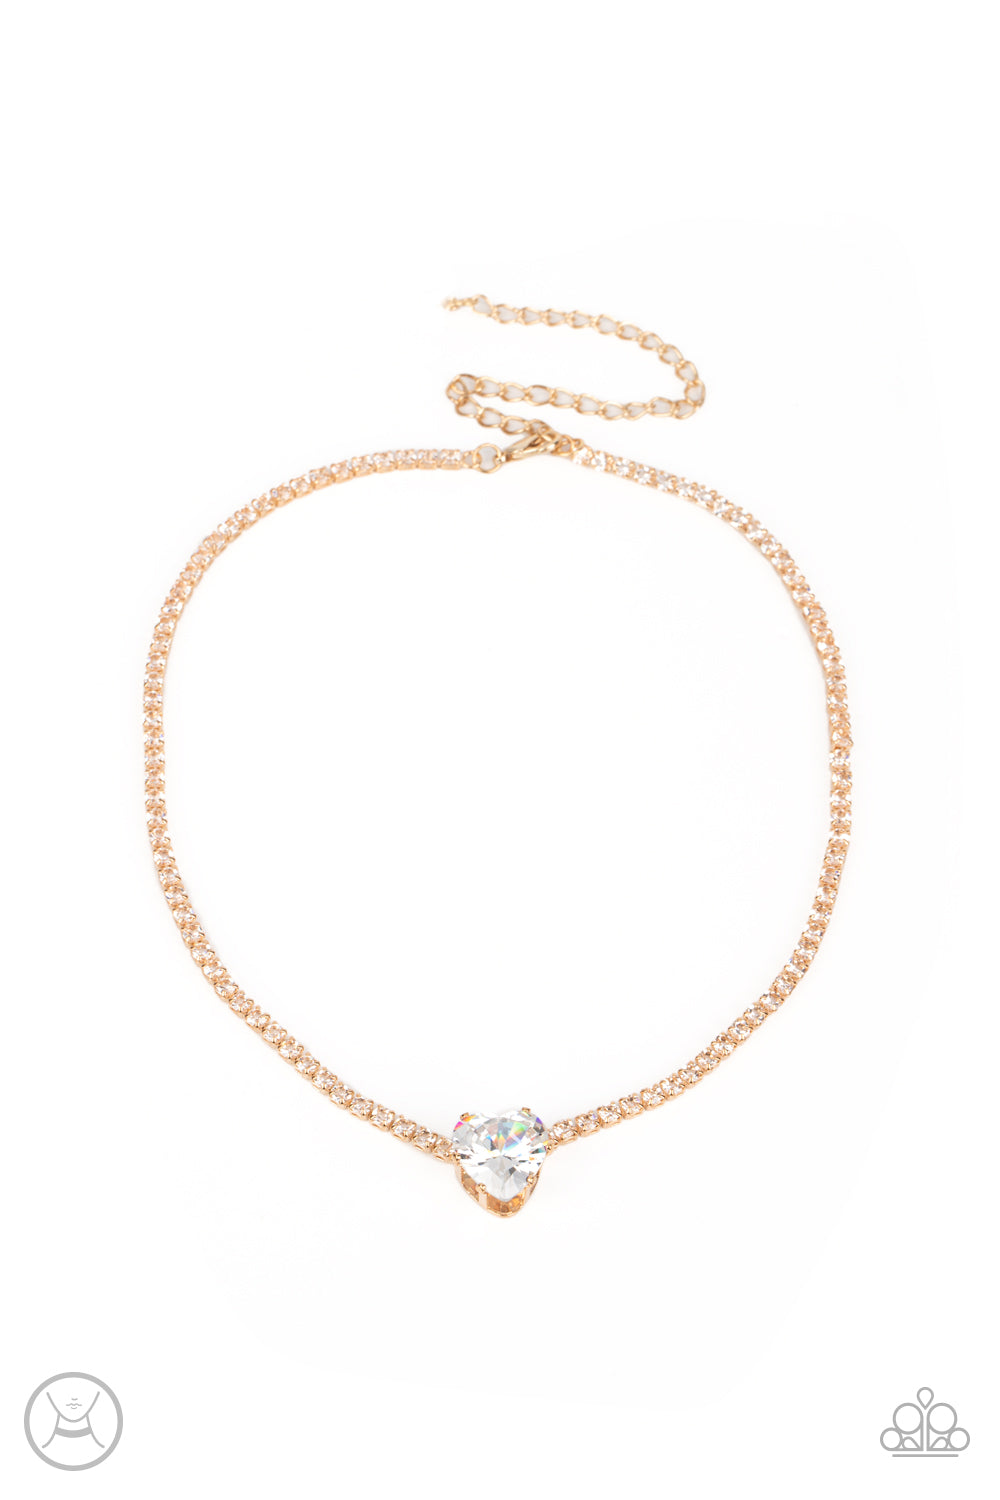 Flirty Fiance Necklace (White, Gold)